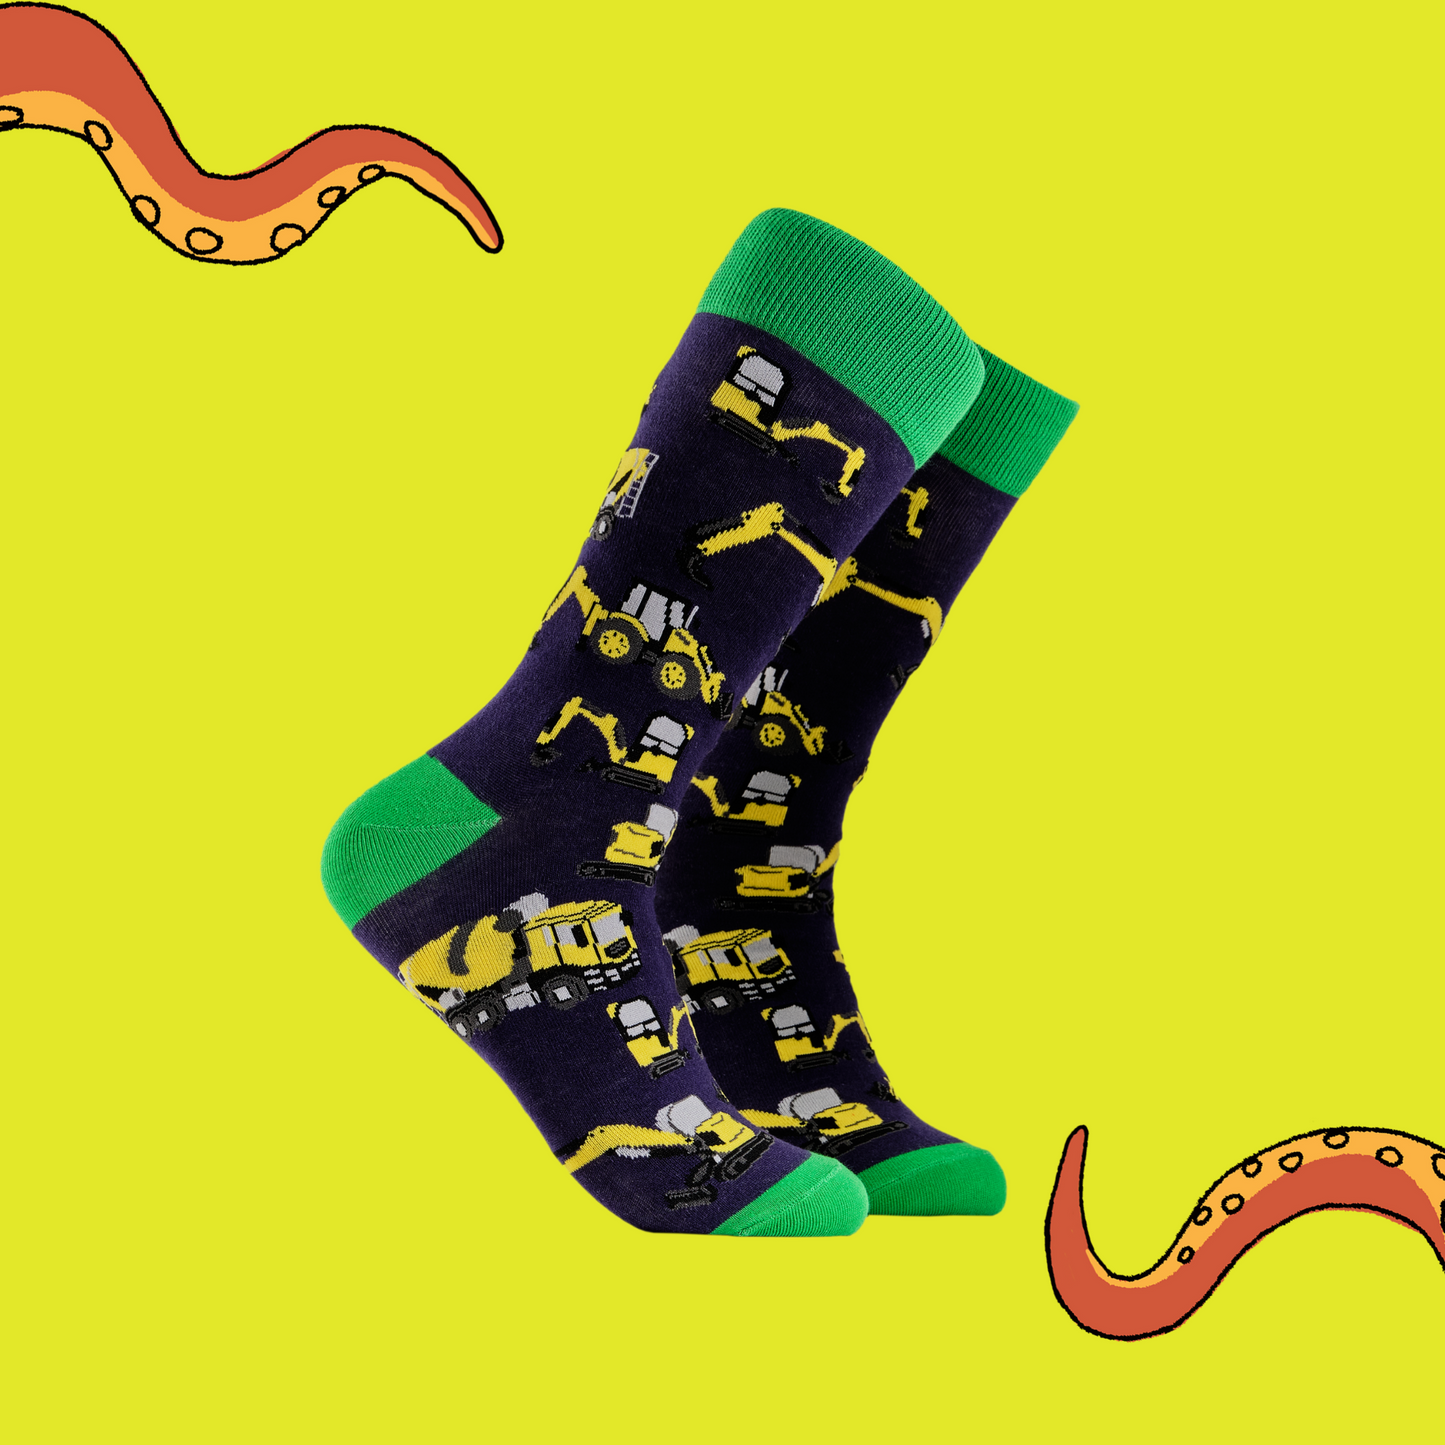 Farming Socks - Diggers. A pair of socks depicting yellow diggers and construction vehicles. Dark blue legs, green cuff, heel and toe.